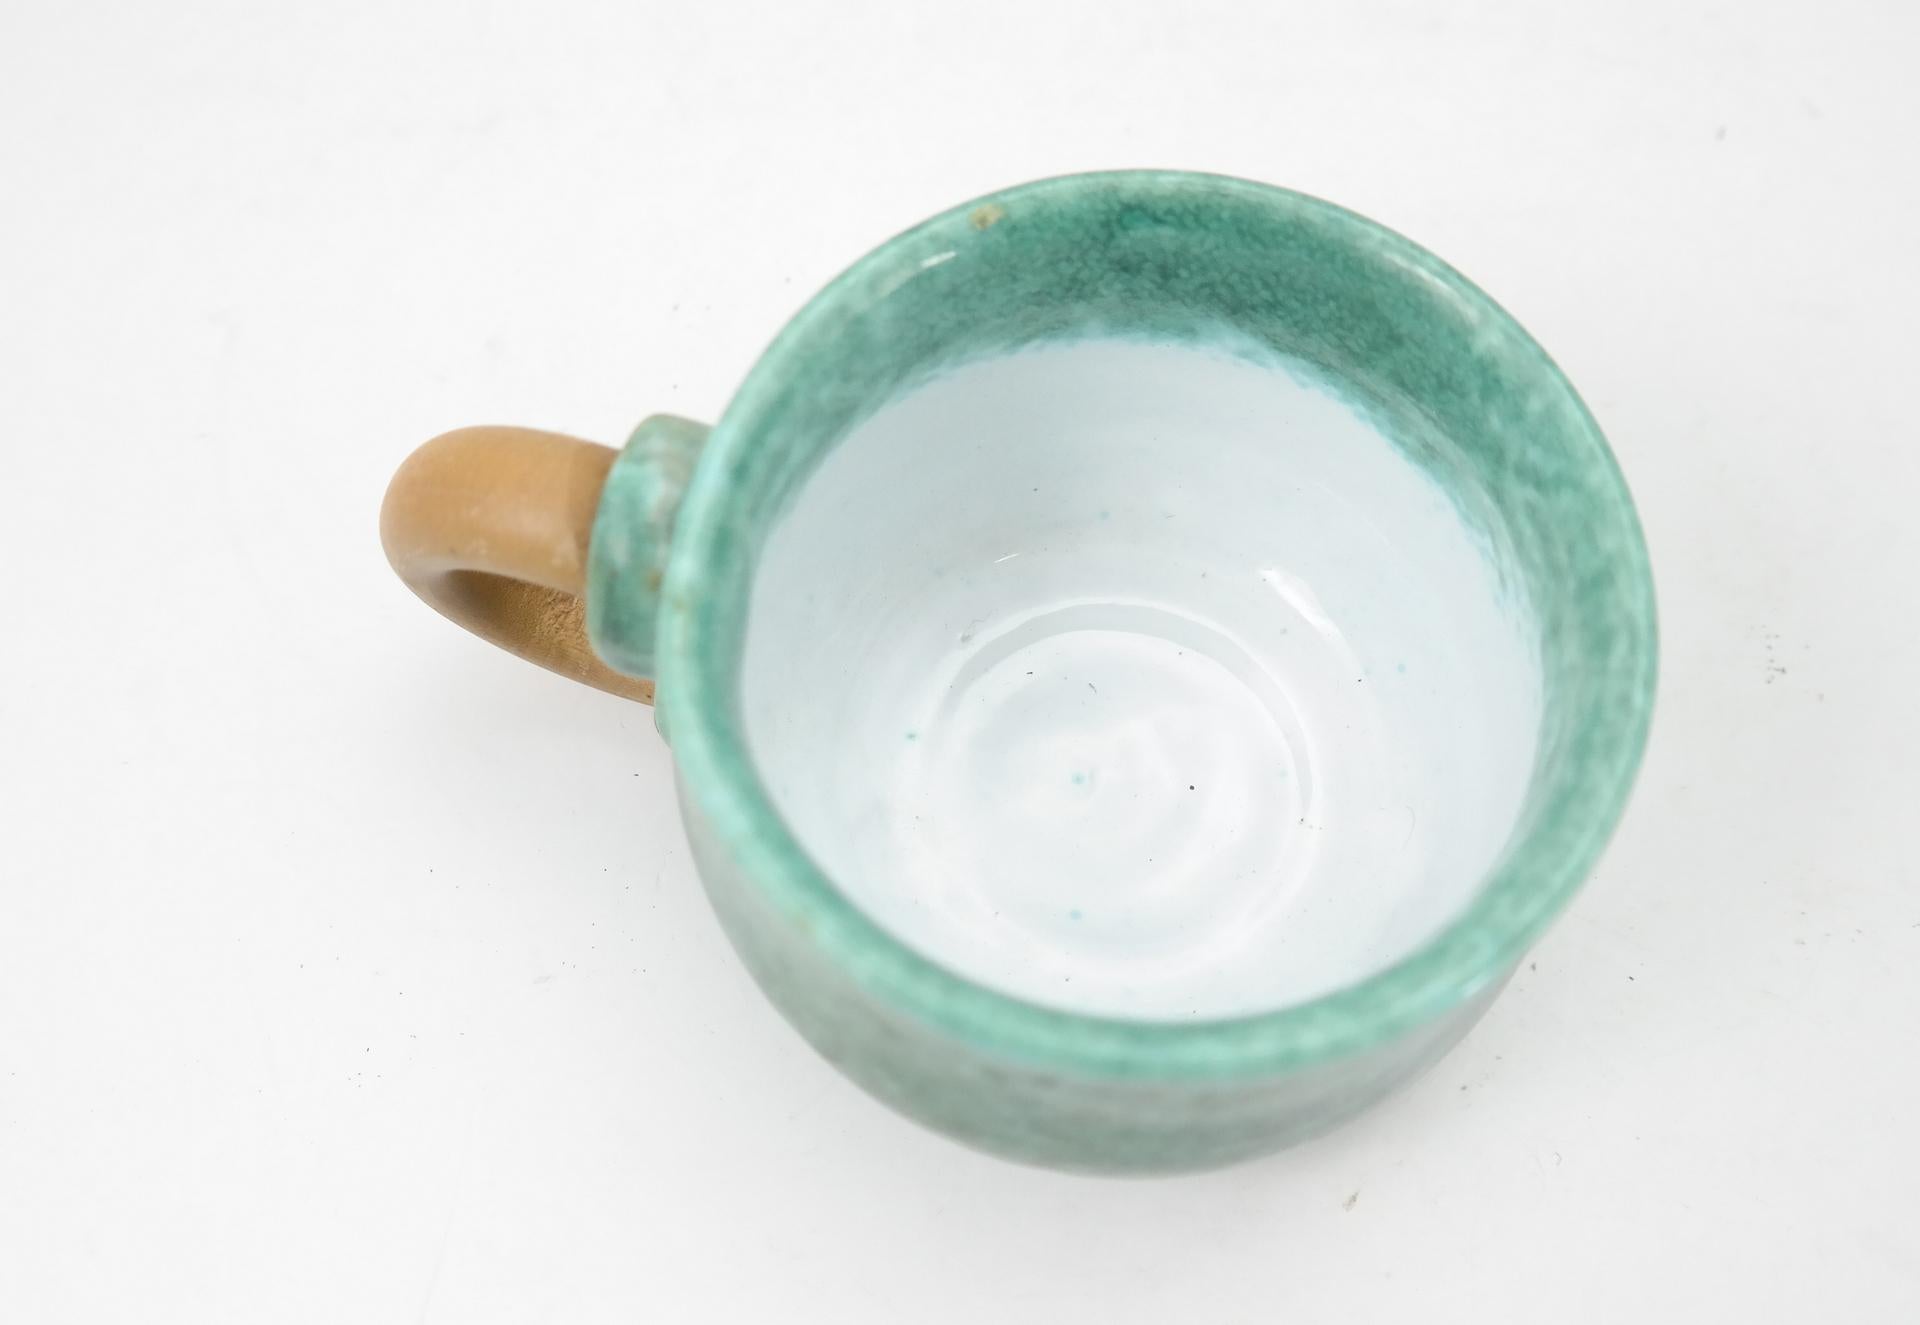 Glazed Wabisabi Style Handmade Ceramic Tea Set on Wooden Tray by M. Kalmar